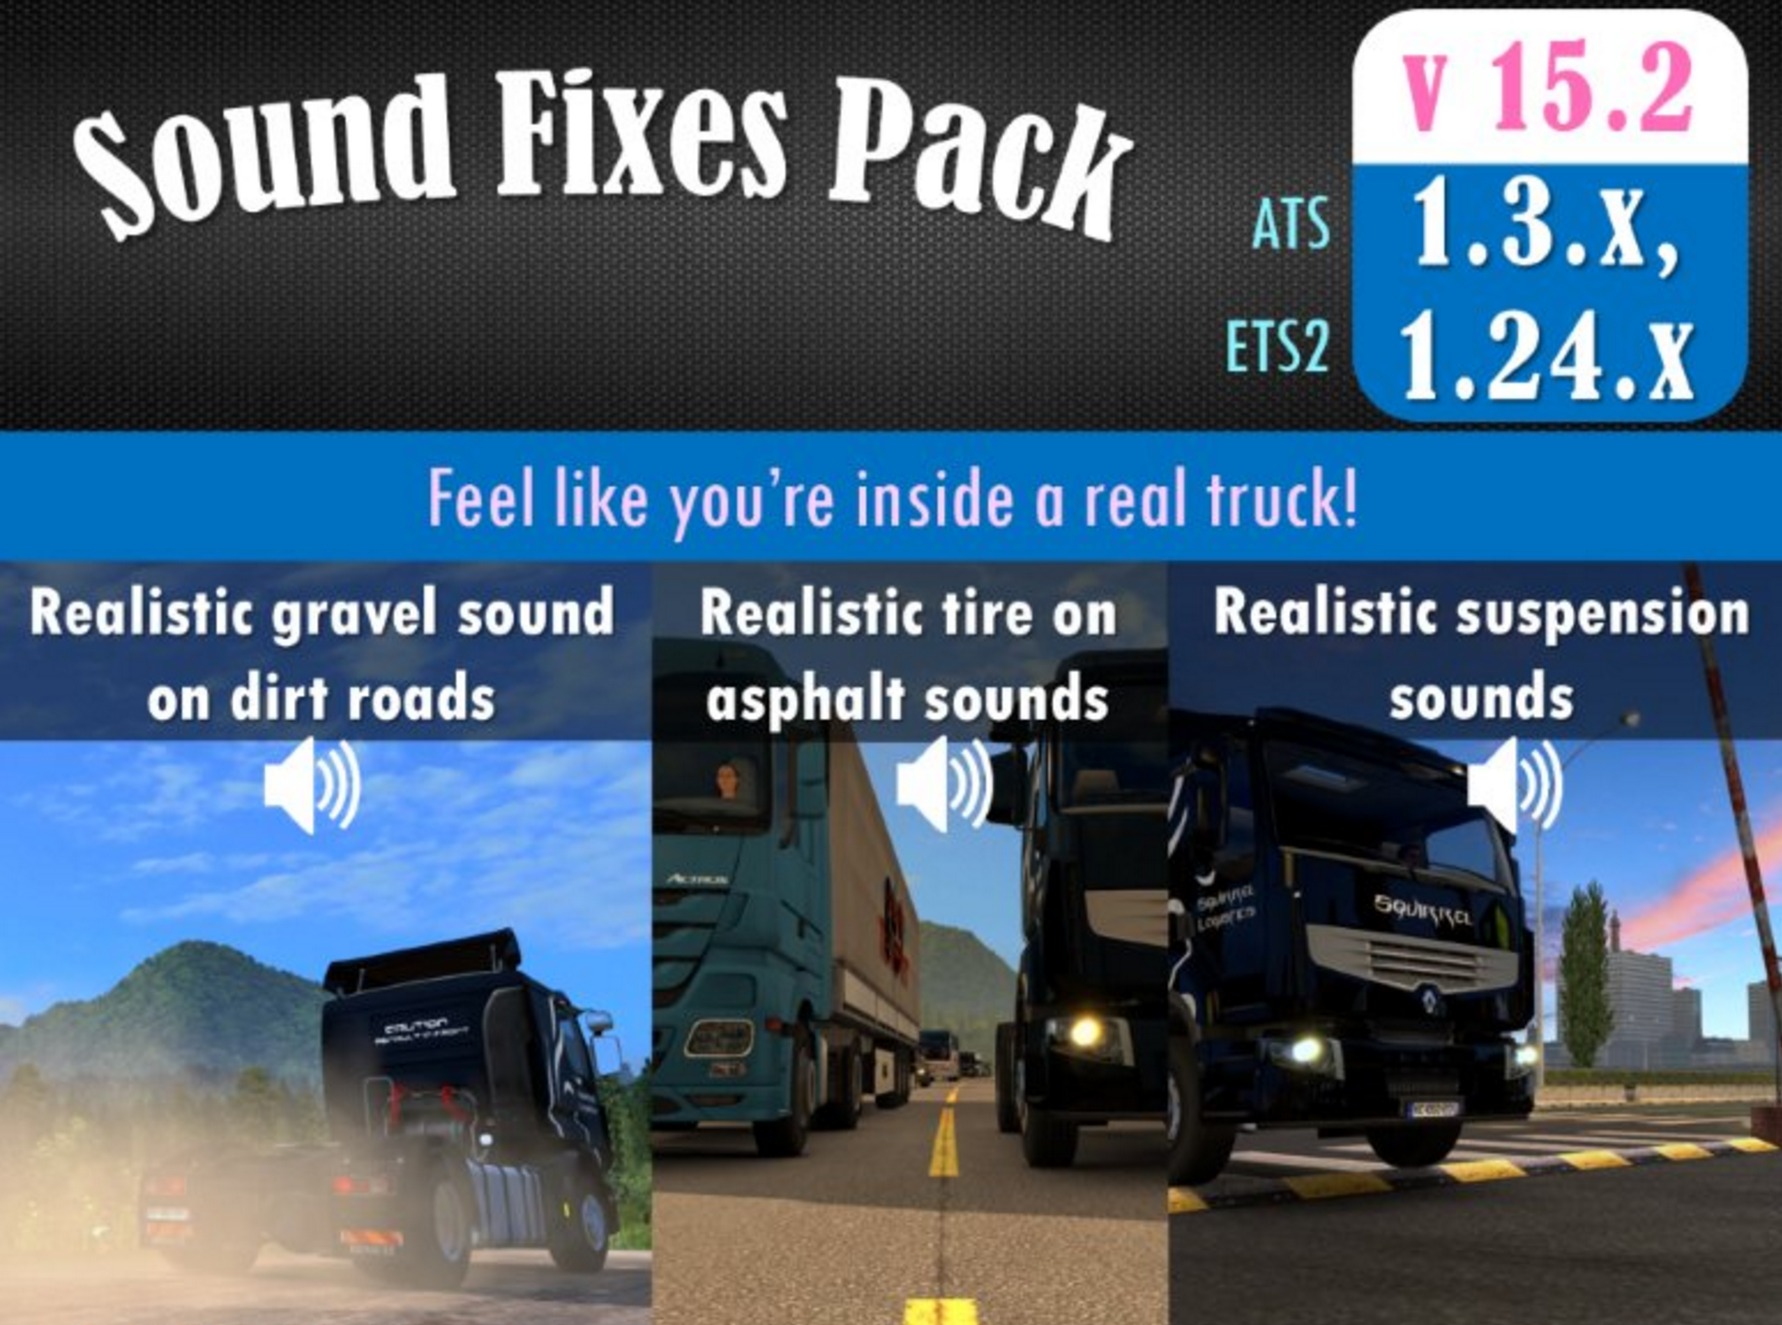 Sound Fixes Pack v 15.2